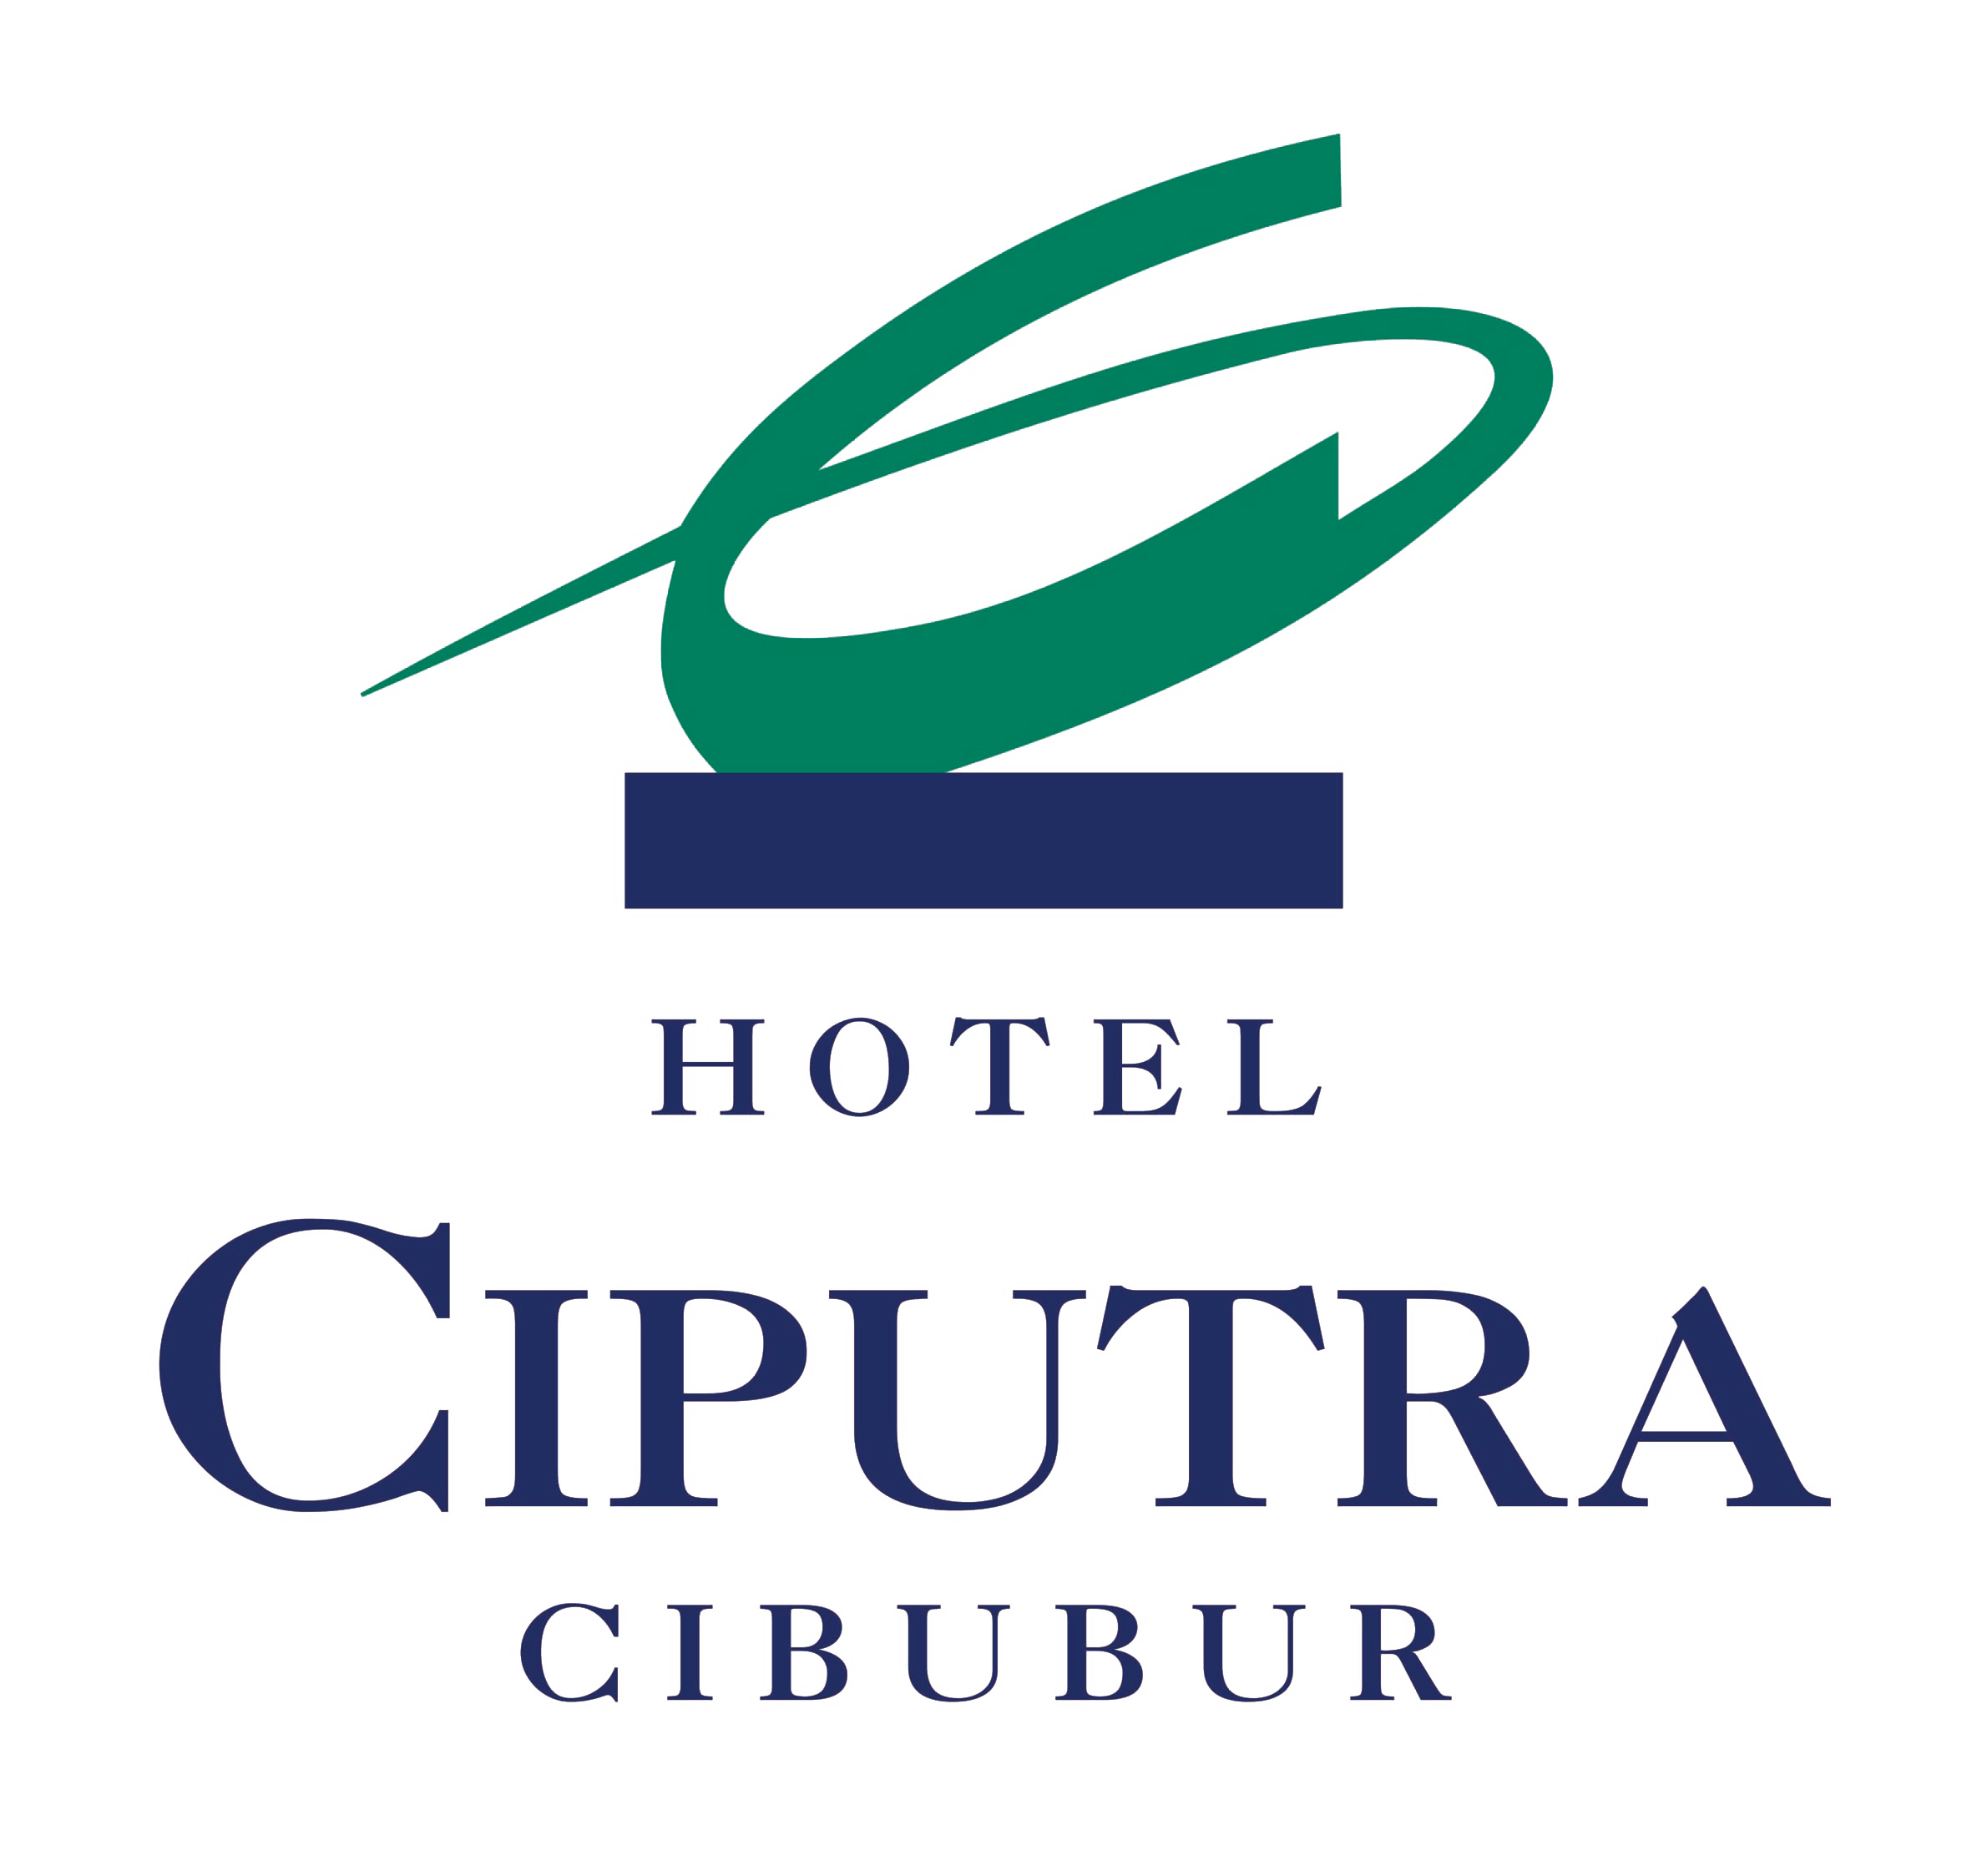 Hotel Ciputra Cibubur managed by Swiss-Belhotel International